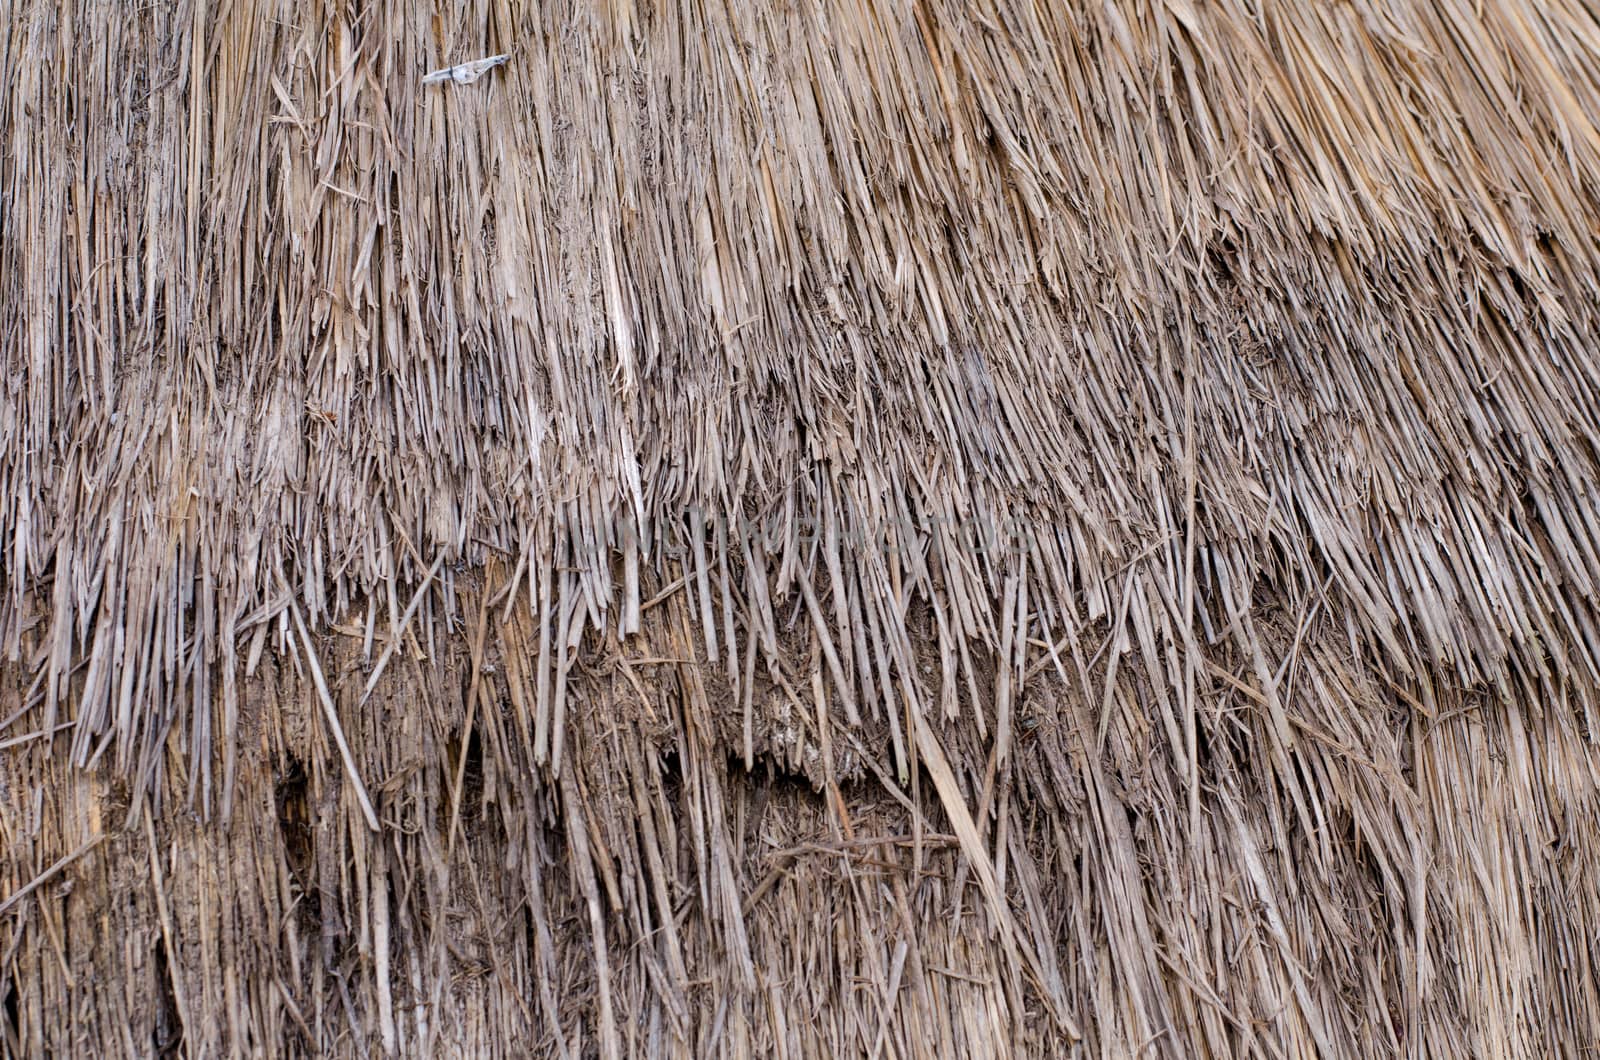 Dry straw pattern by thekaikoro